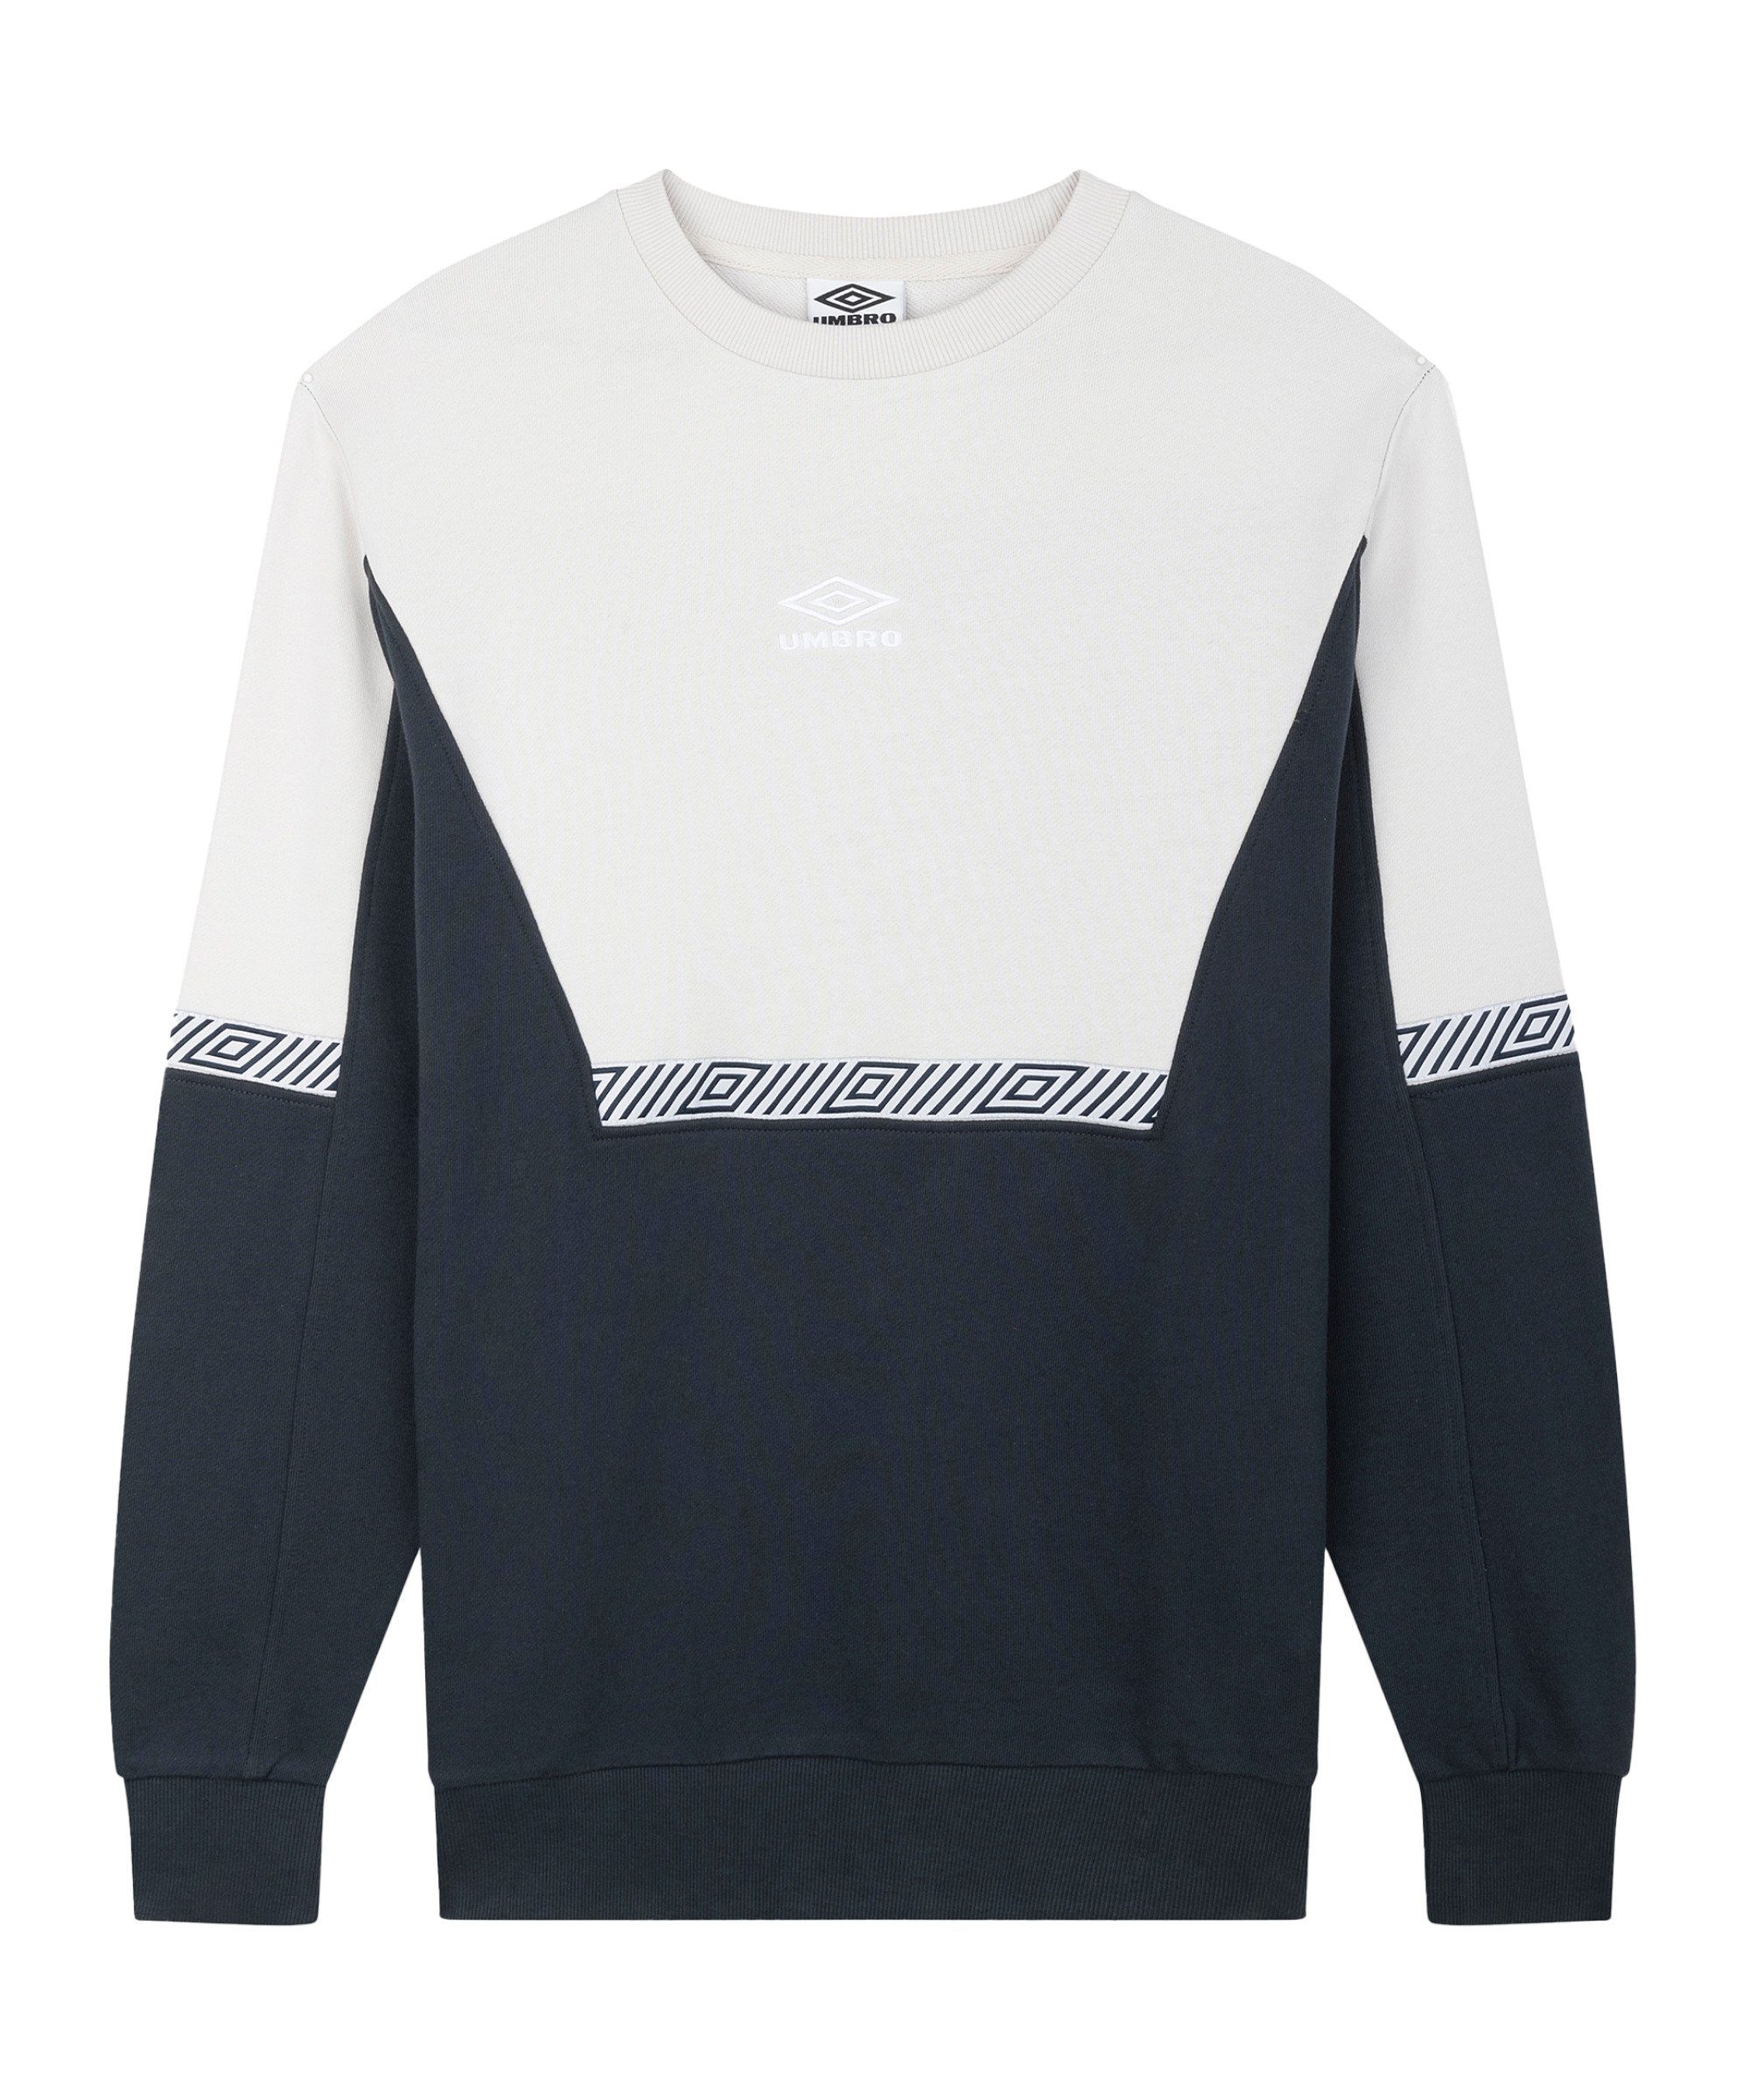 Sports Umbro Sweatshirt Style Sweatshirt Club graublau